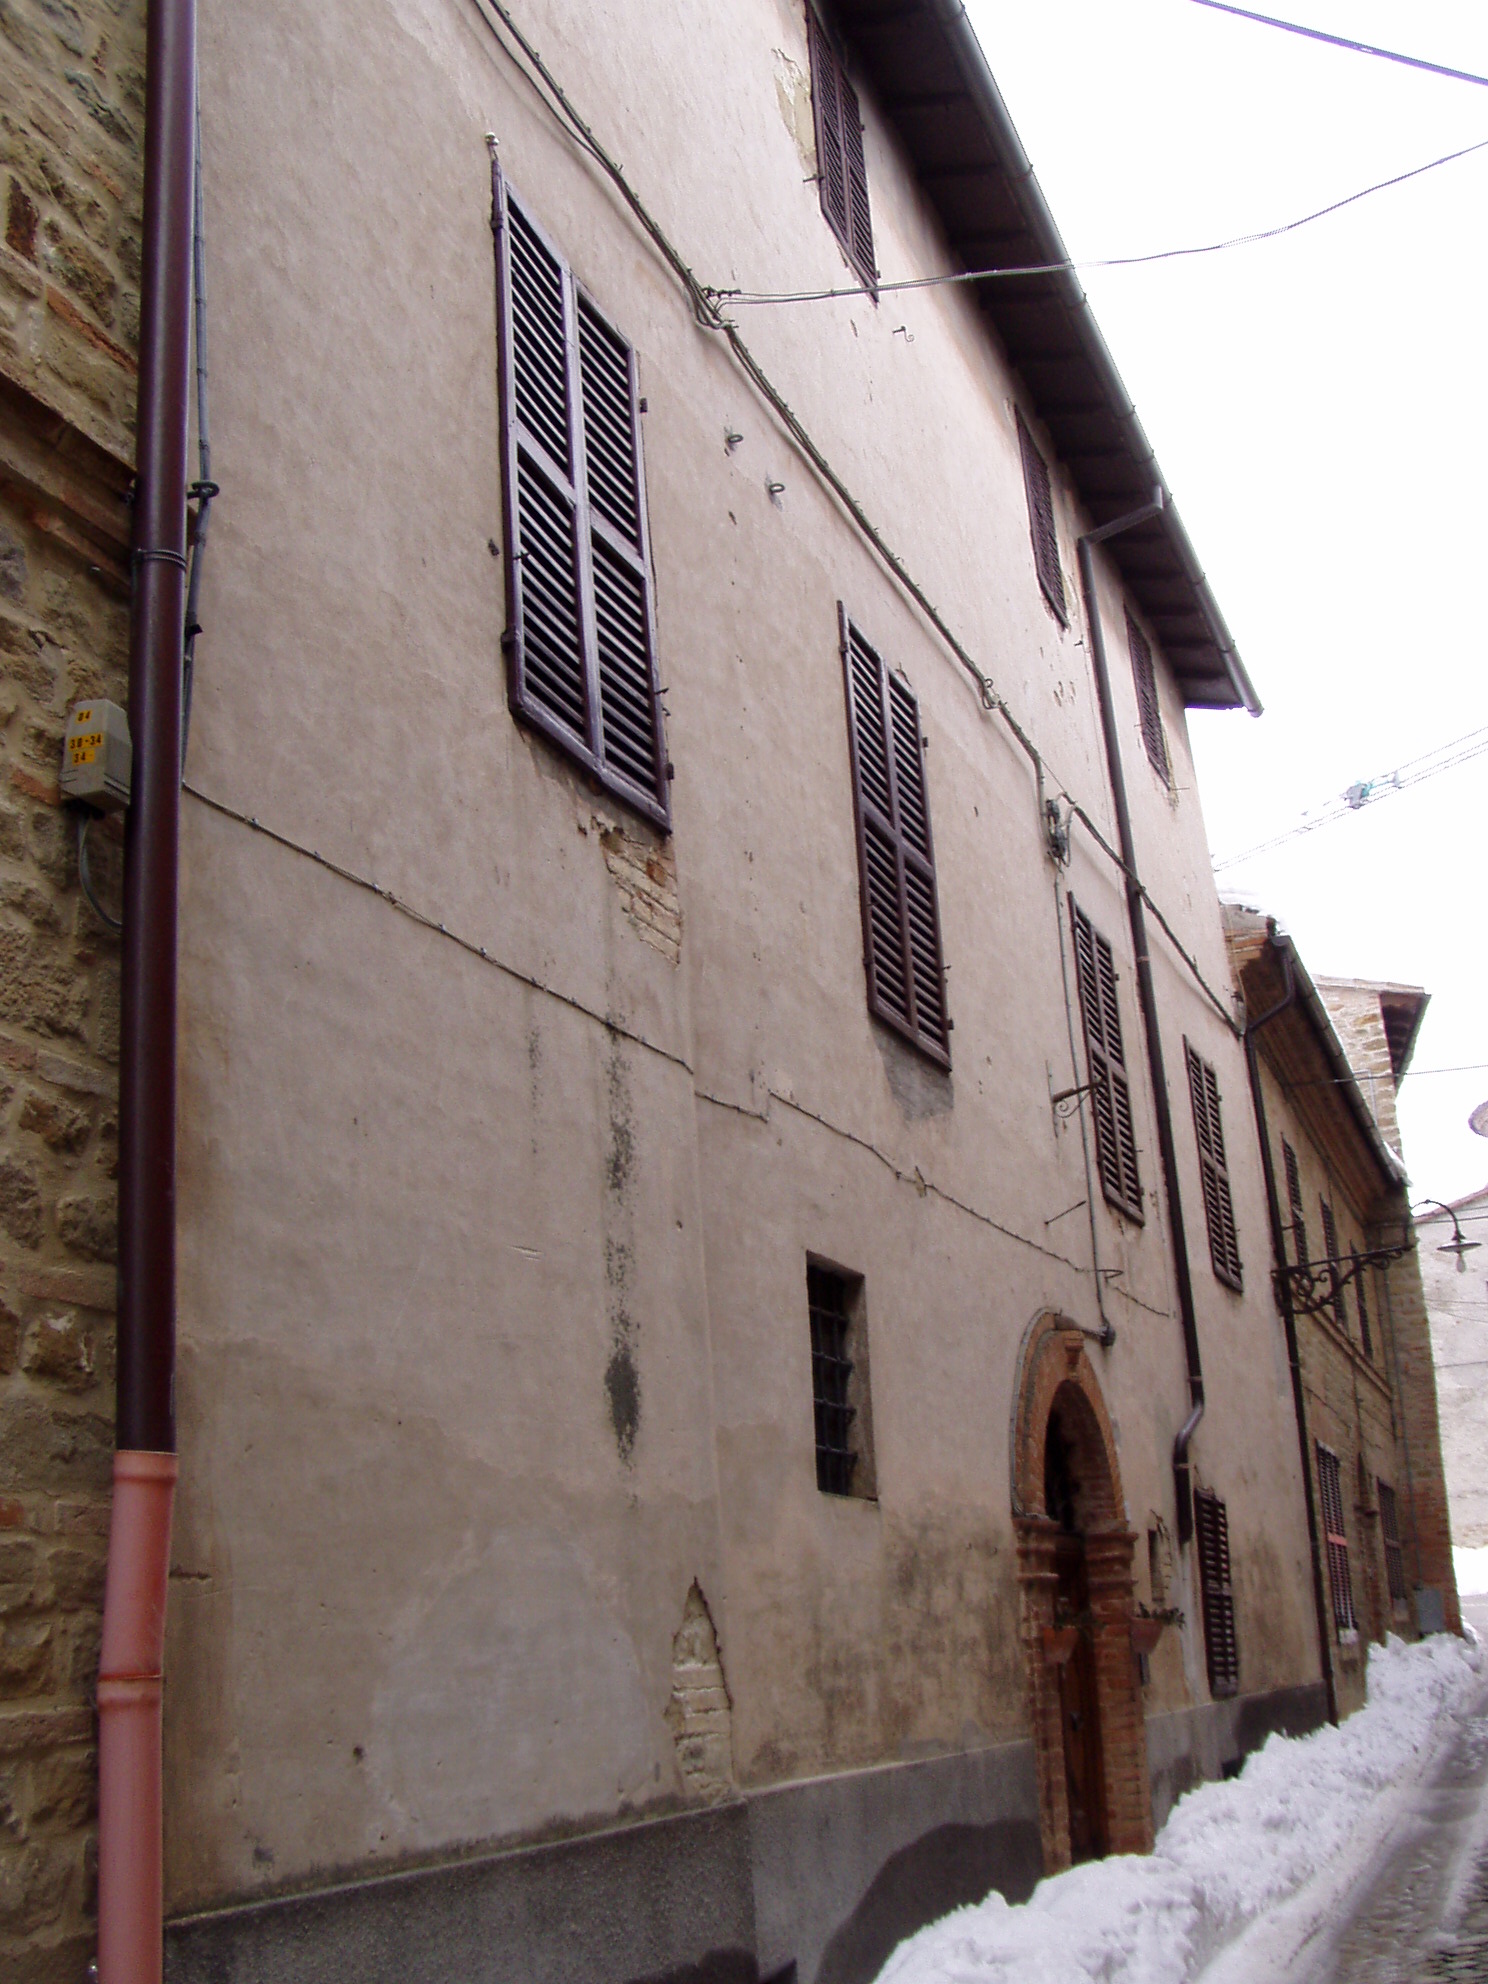 Palazzo nobiliare (palazzo, nobiliare) - San Ginesio (MC) 